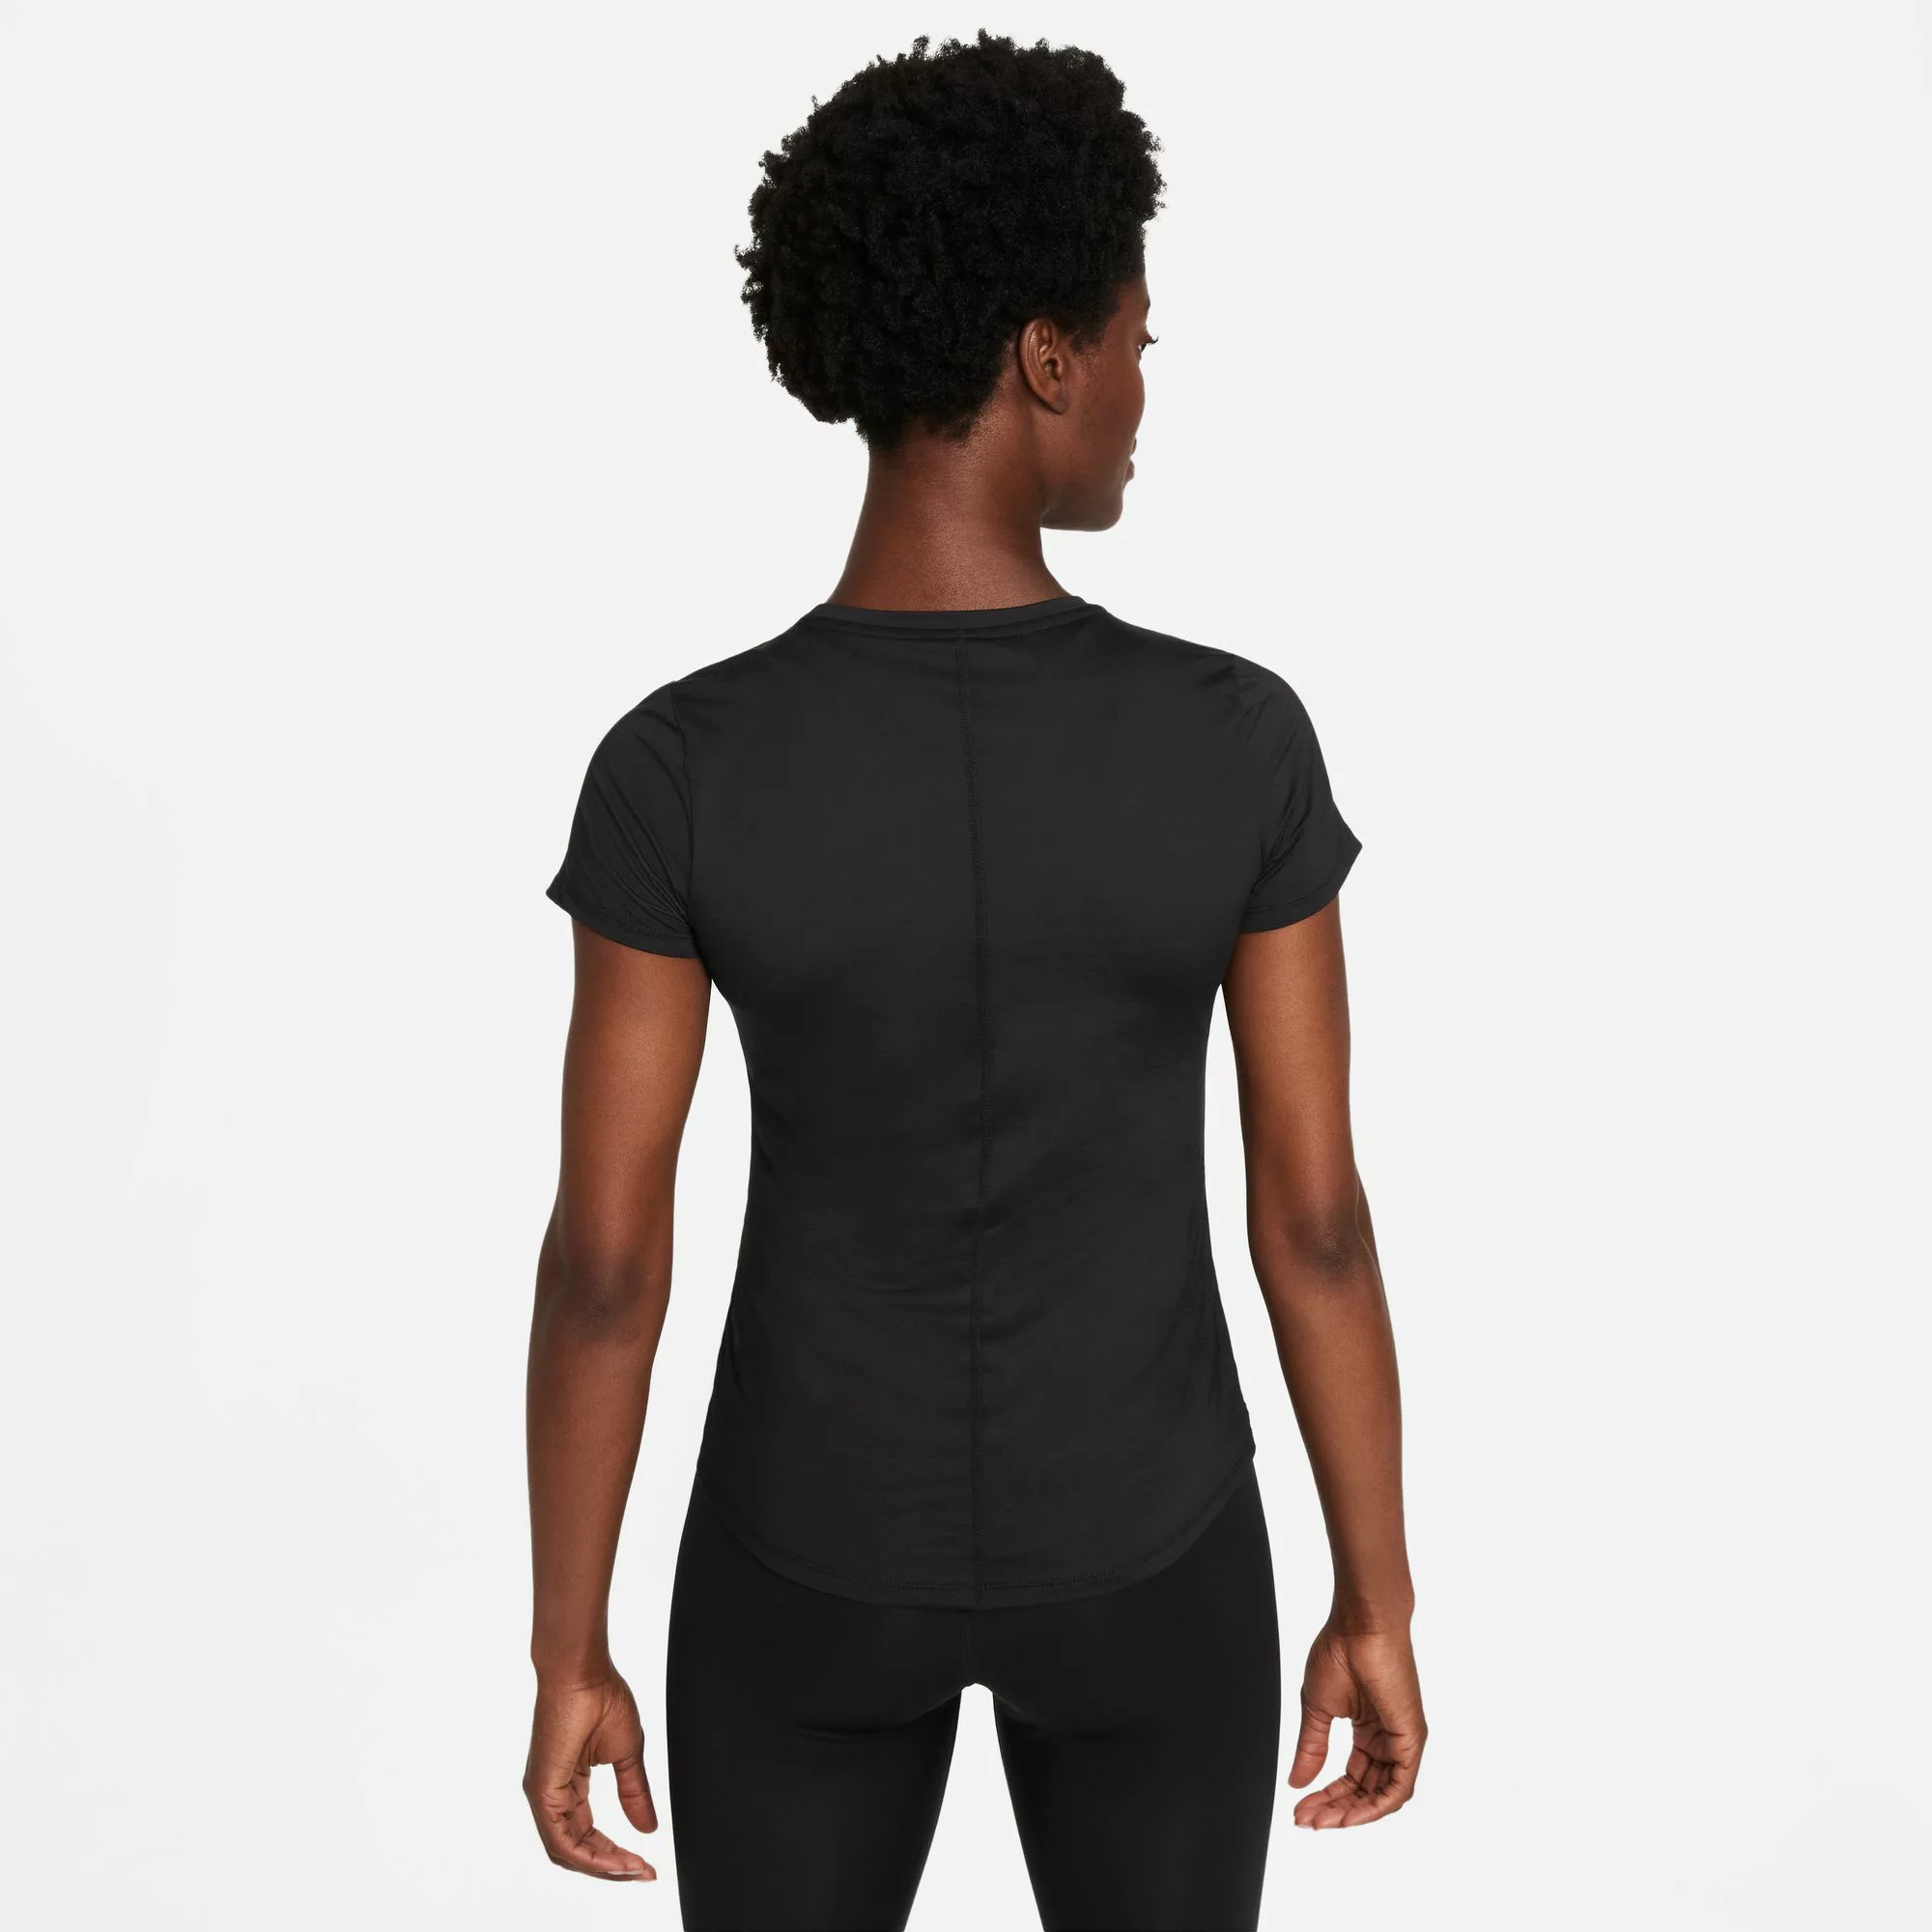 Nike Dri Fit One Fit Kurzarm T-shirt S Black / White günstig online kaufen